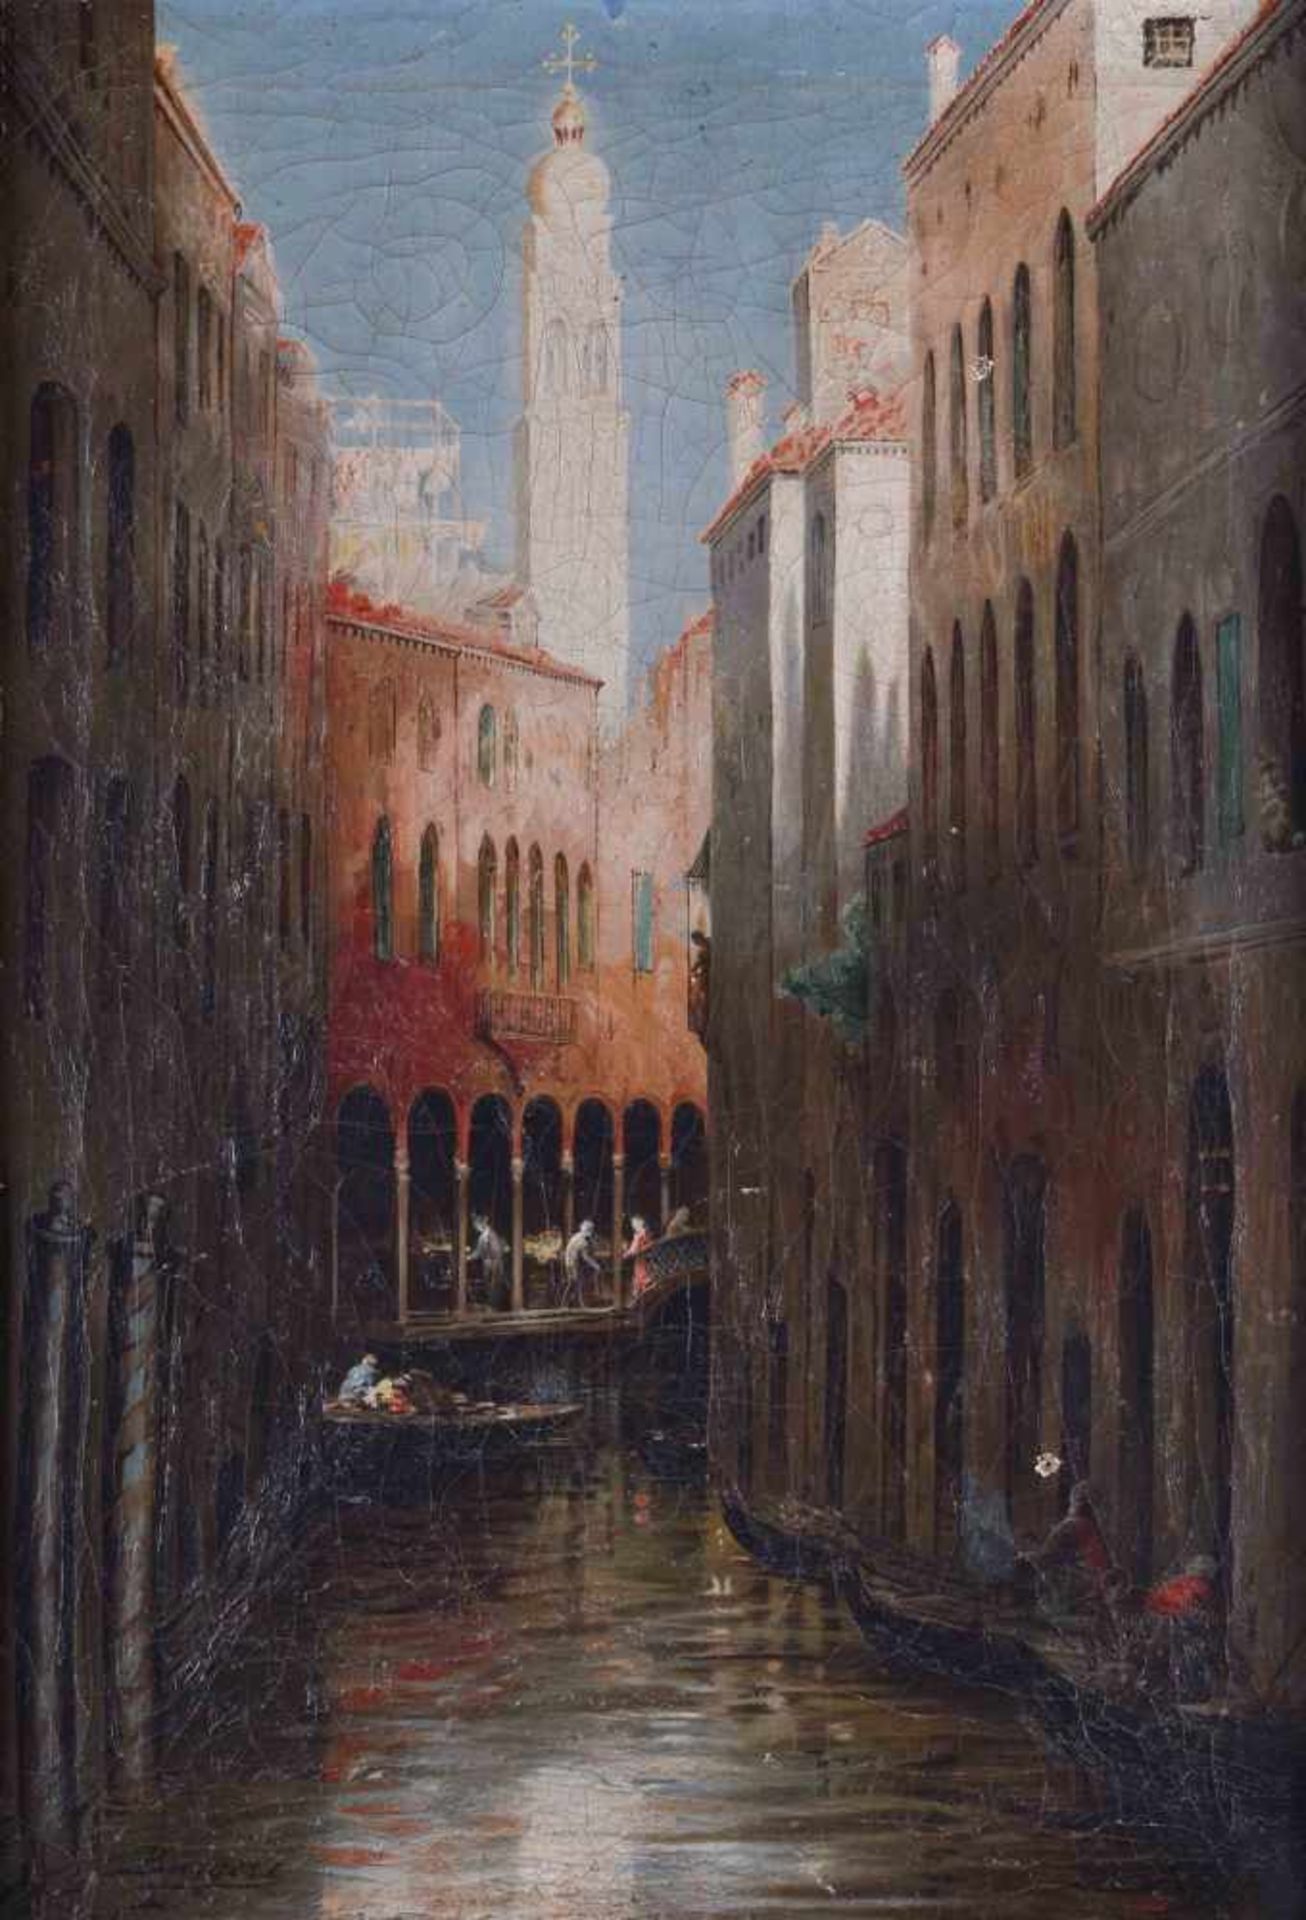 Hendricus Jacobus BÜRGERS (1834-1899)"Venedig"painting oil / canvas, 65 cm x 44.5 cm, with frame